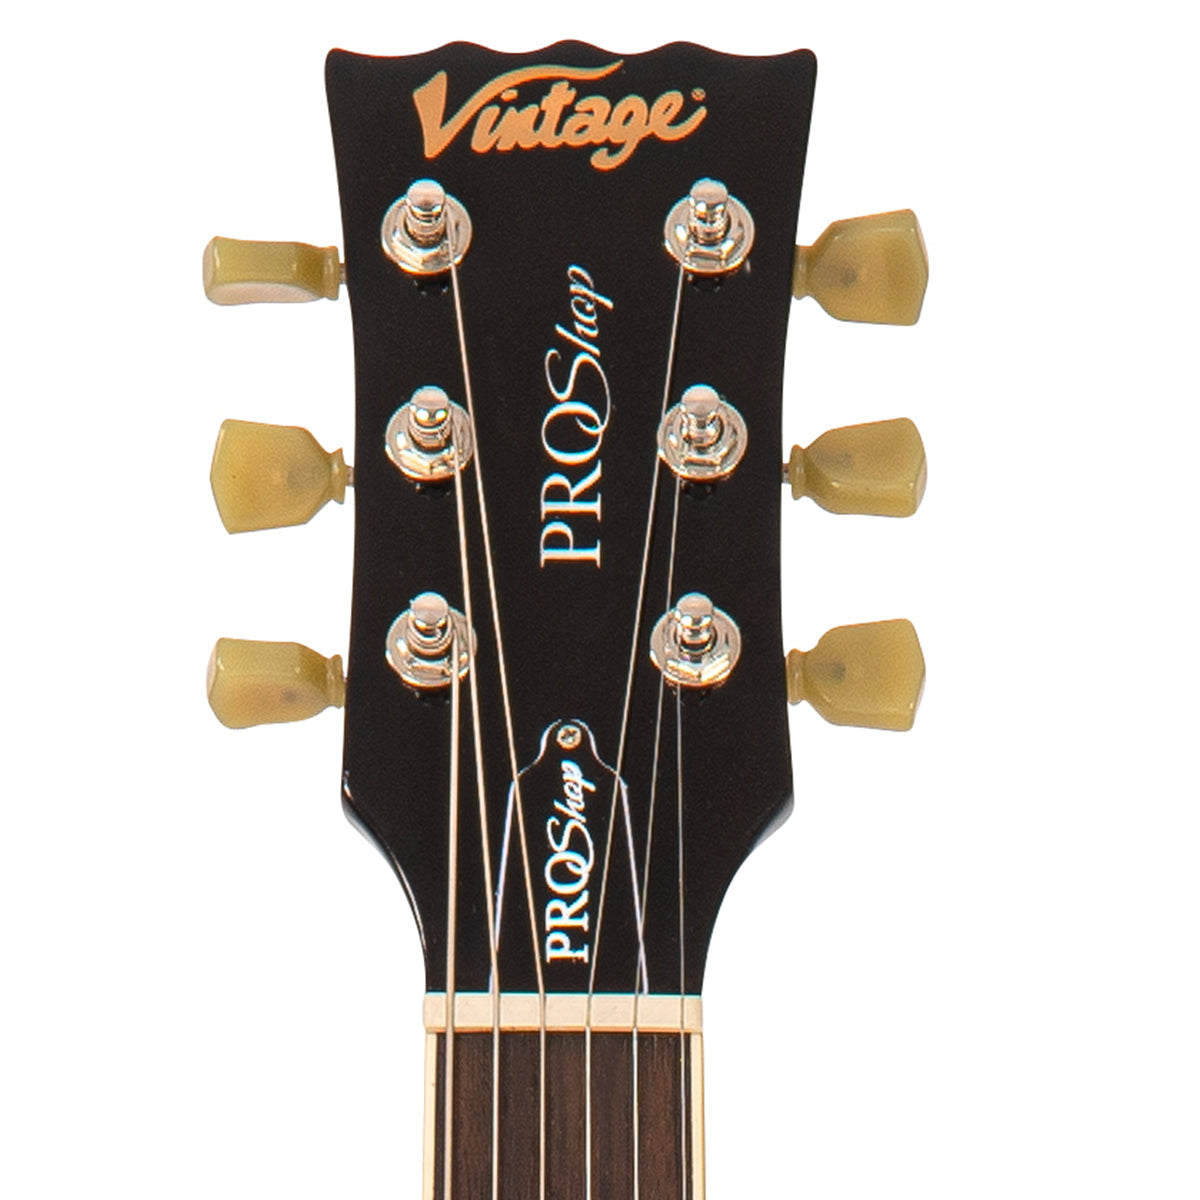 Vintage V100 ProShop Unique ~ Blue Alumitone, Electric Guitars for sale at Richards Guitars.